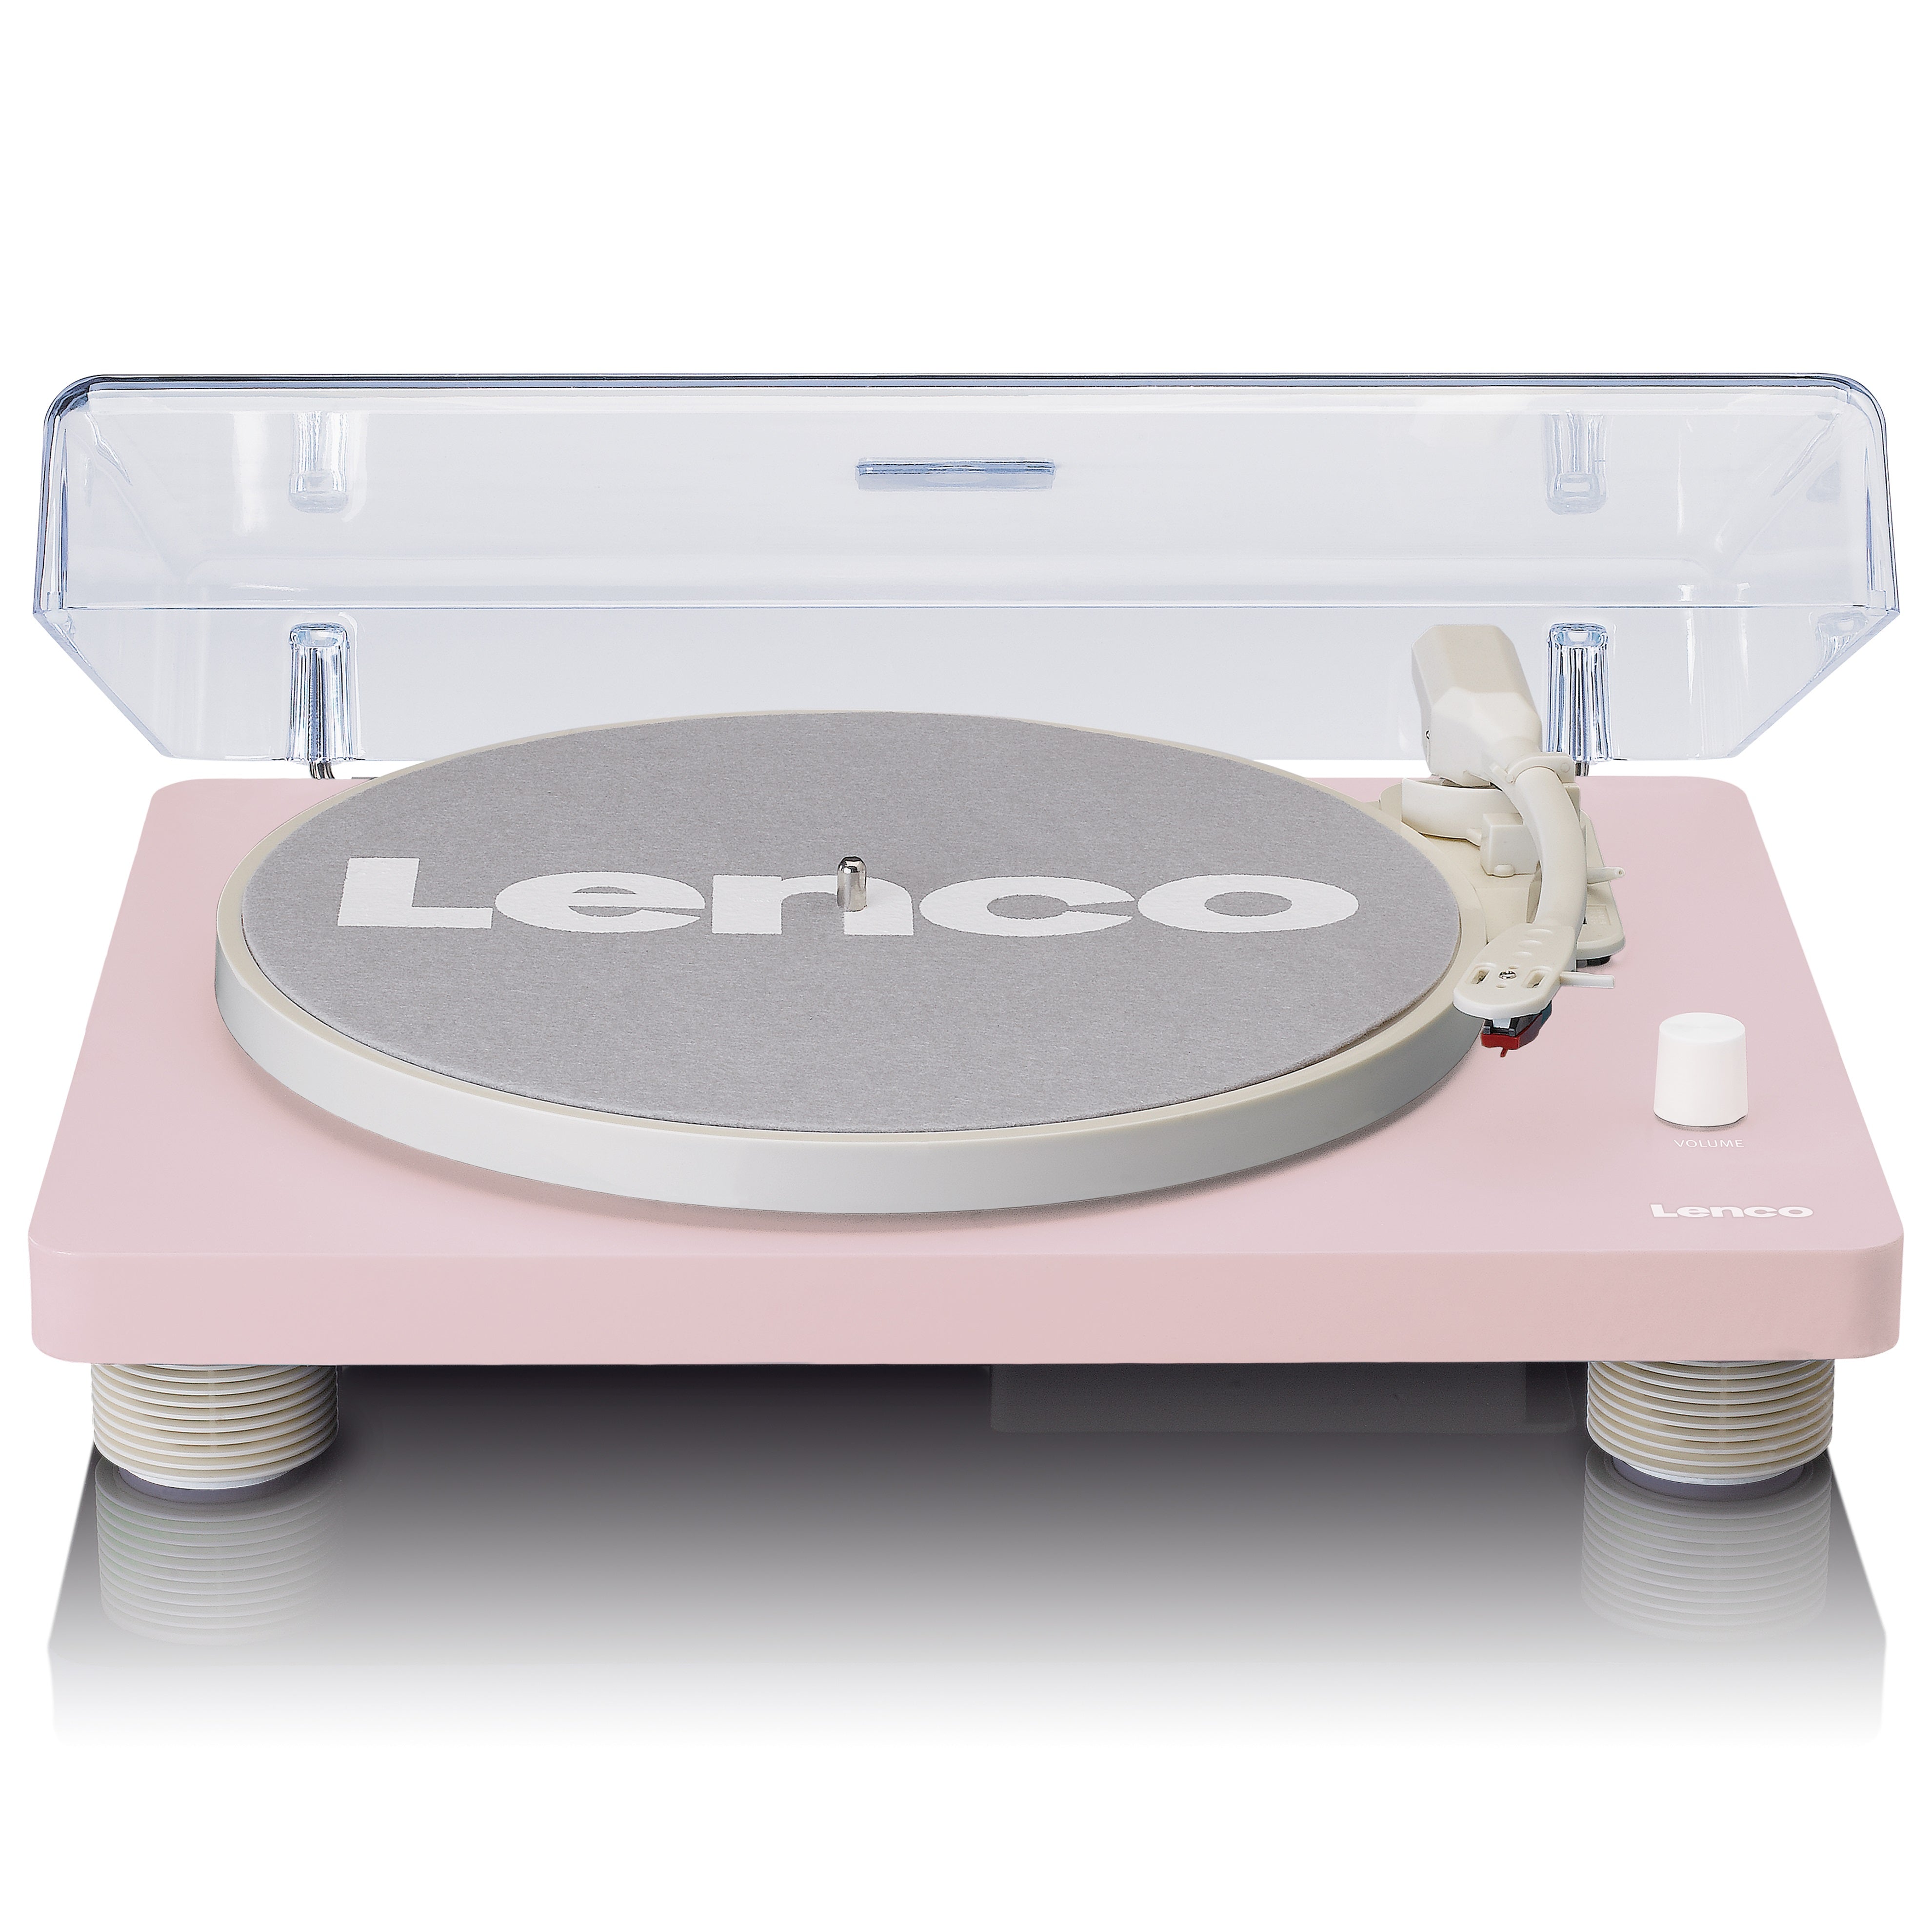 Lenco kopen? Nu de Lenco Shop in Officiële | LS-50PK